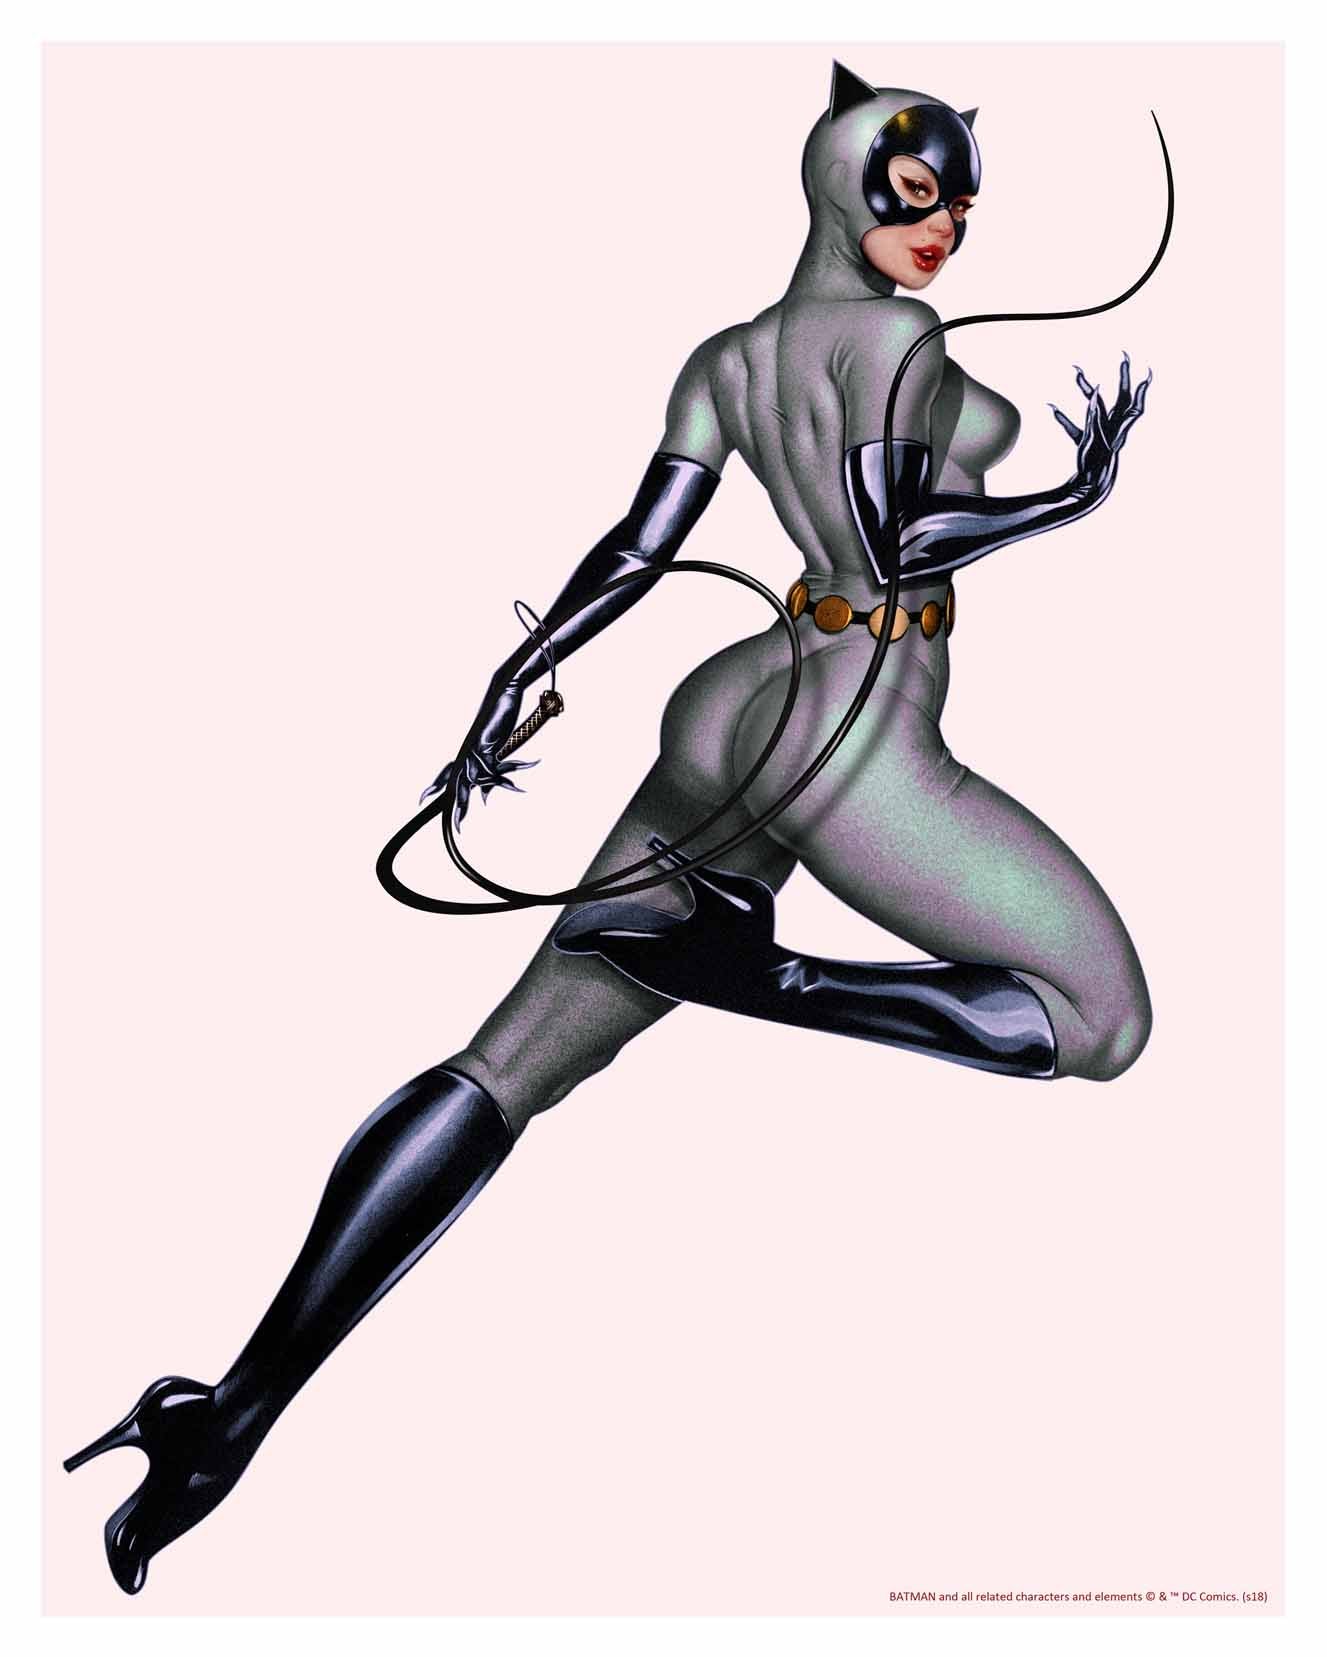 John Keaveney "Catwoman" The Animated Series Variant